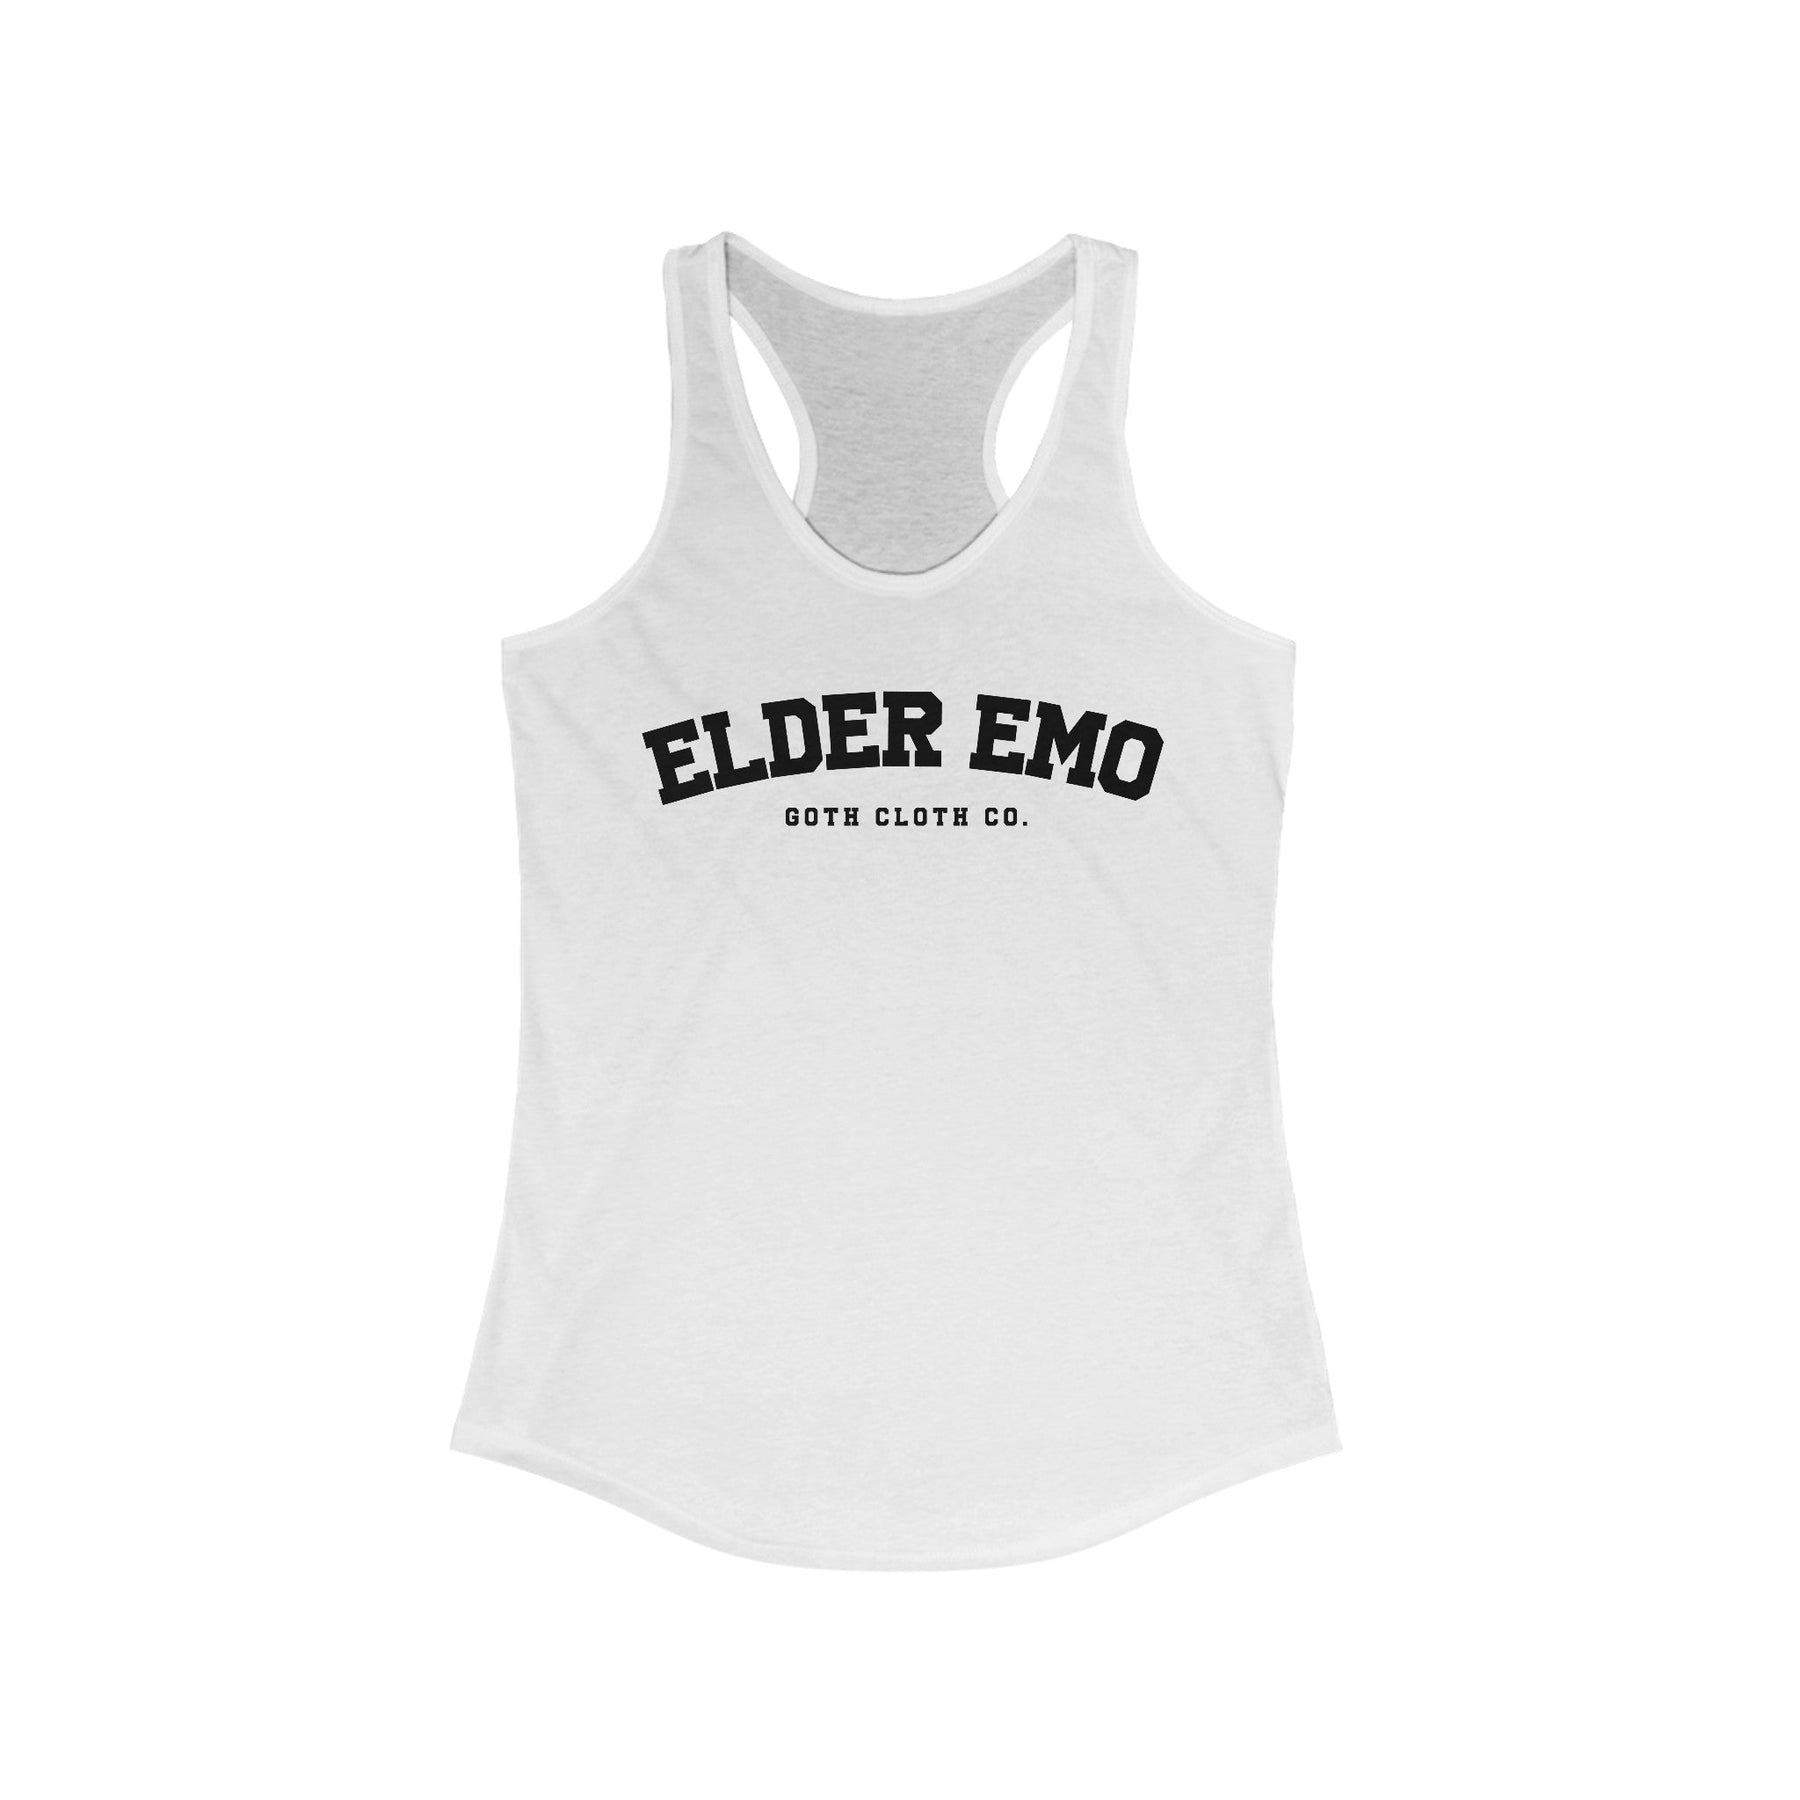 Elder Emo College Women's Racerback Tank - Goth Cloth Co.Tank Top34248467478299584235